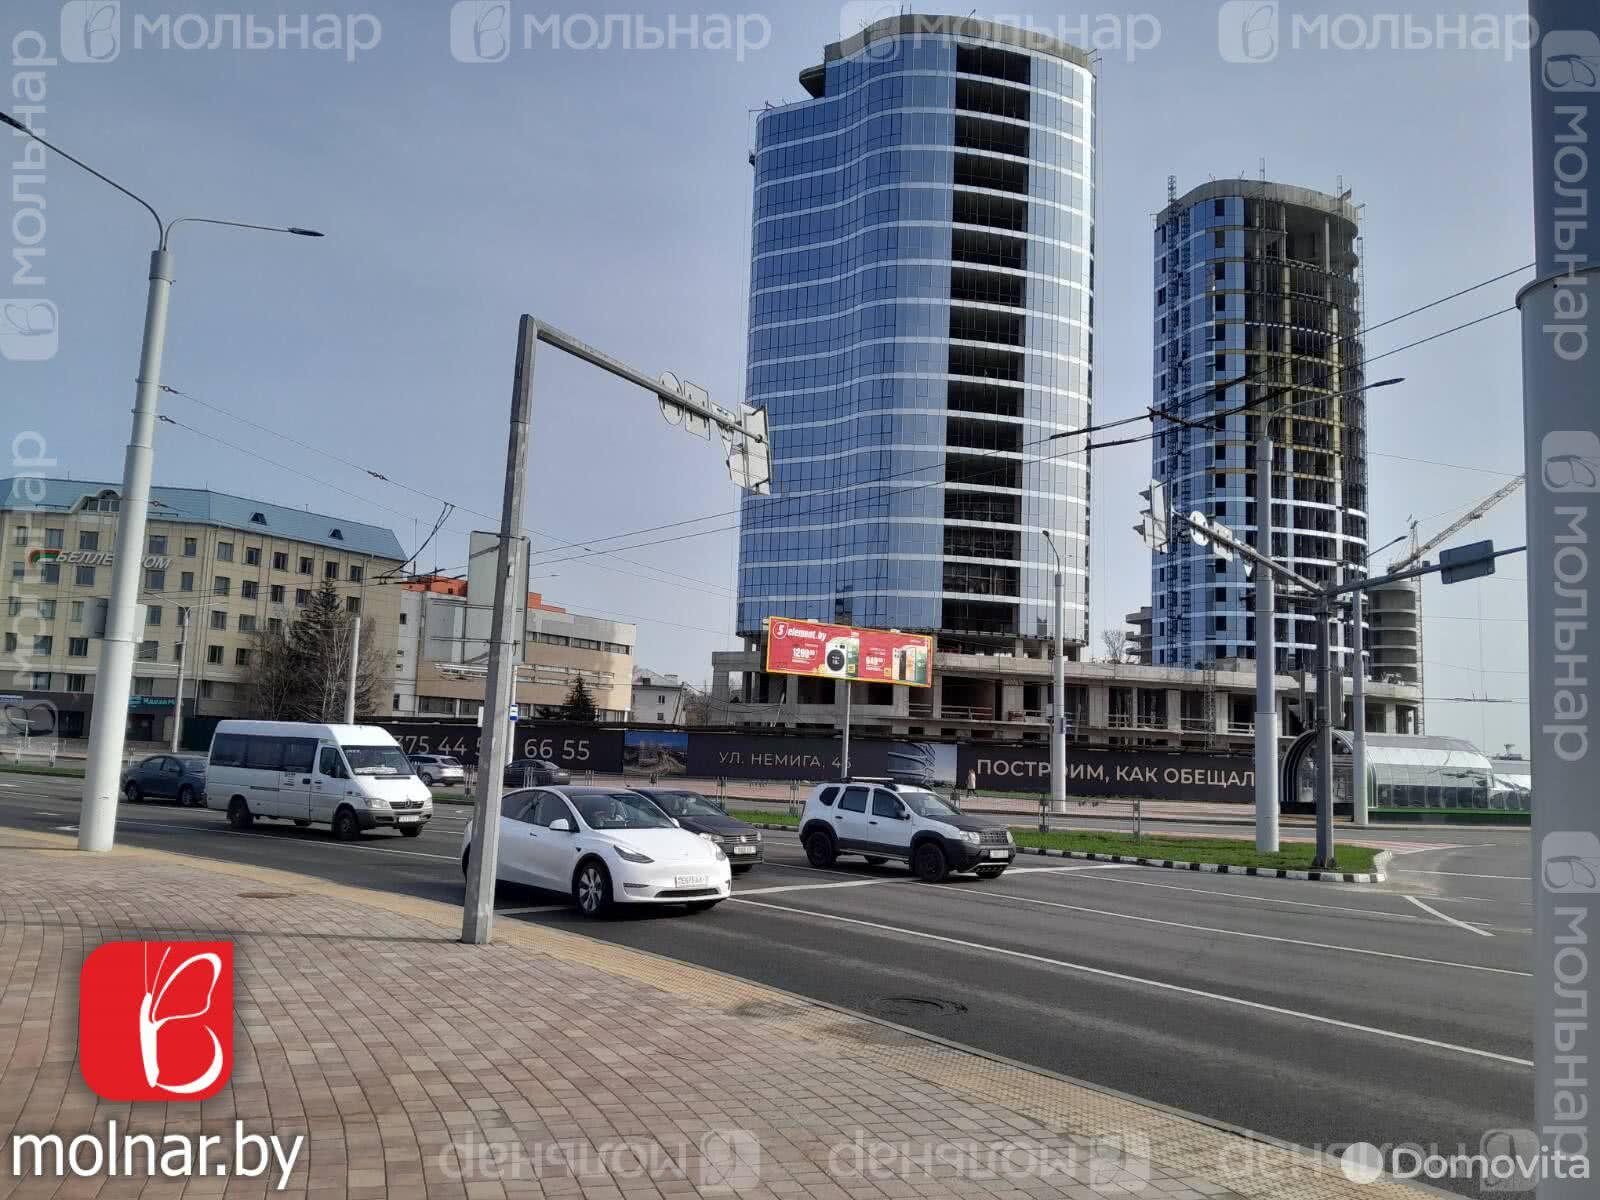 Цена продажи квартиры, Минск, ул. Немига, д. 46